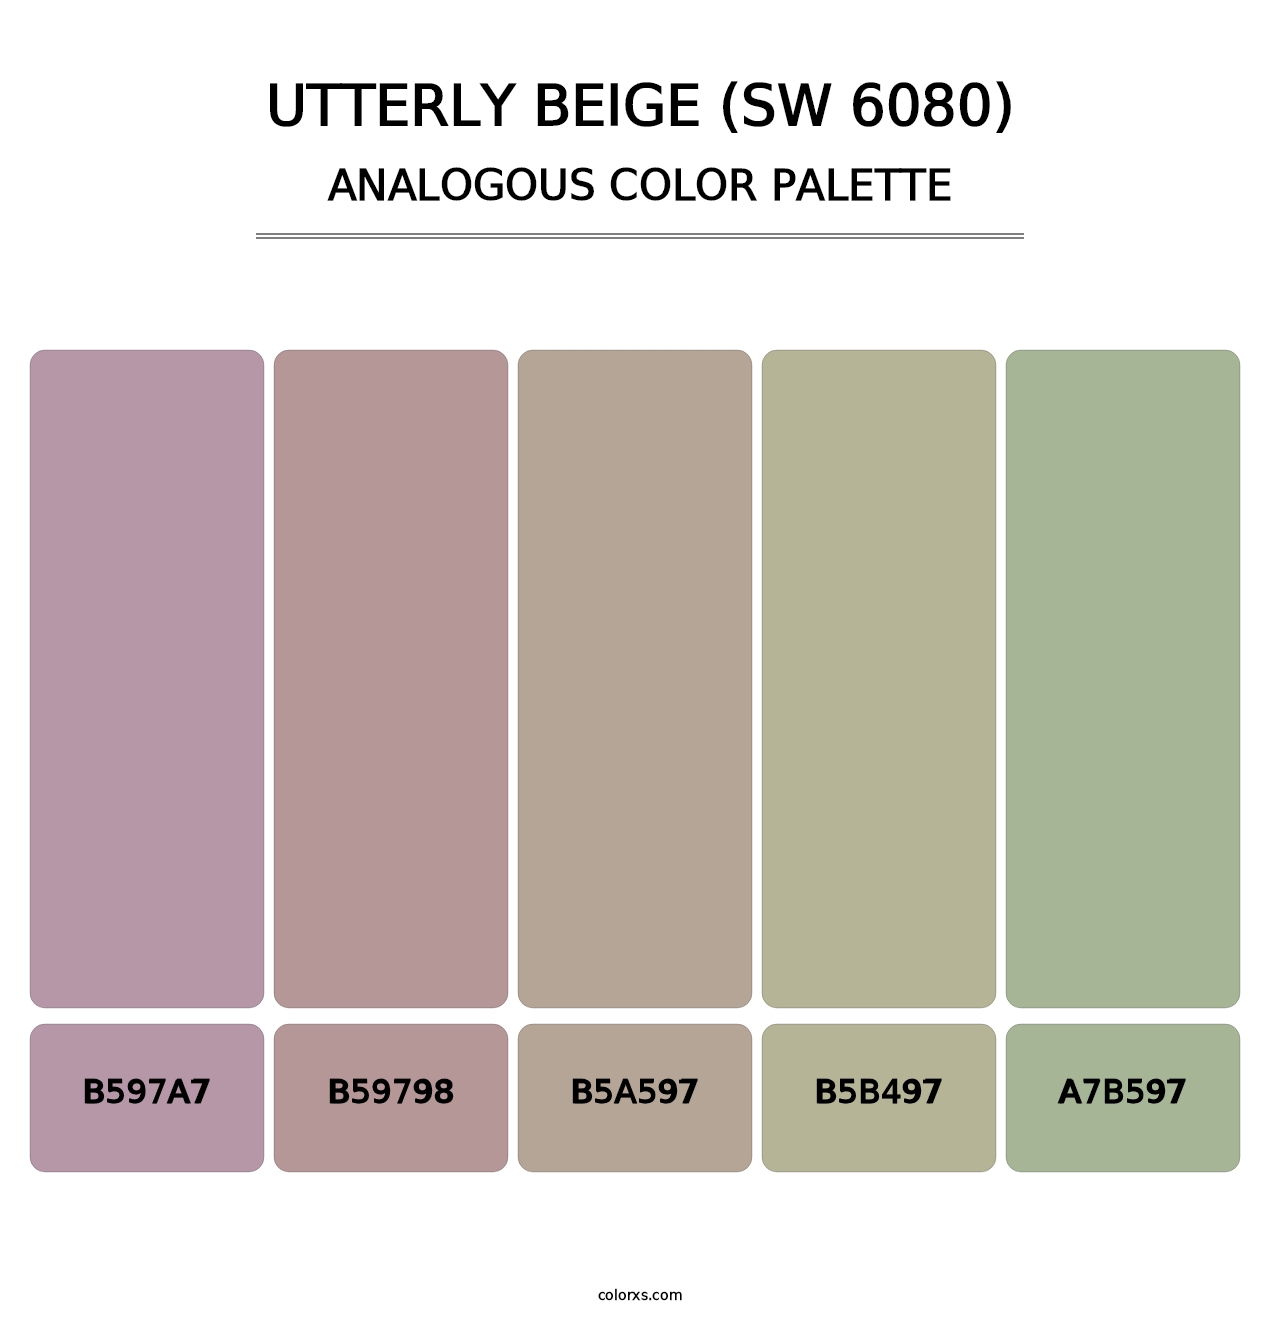 Utterly Beige (SW 6080) - Analogous Color Palette